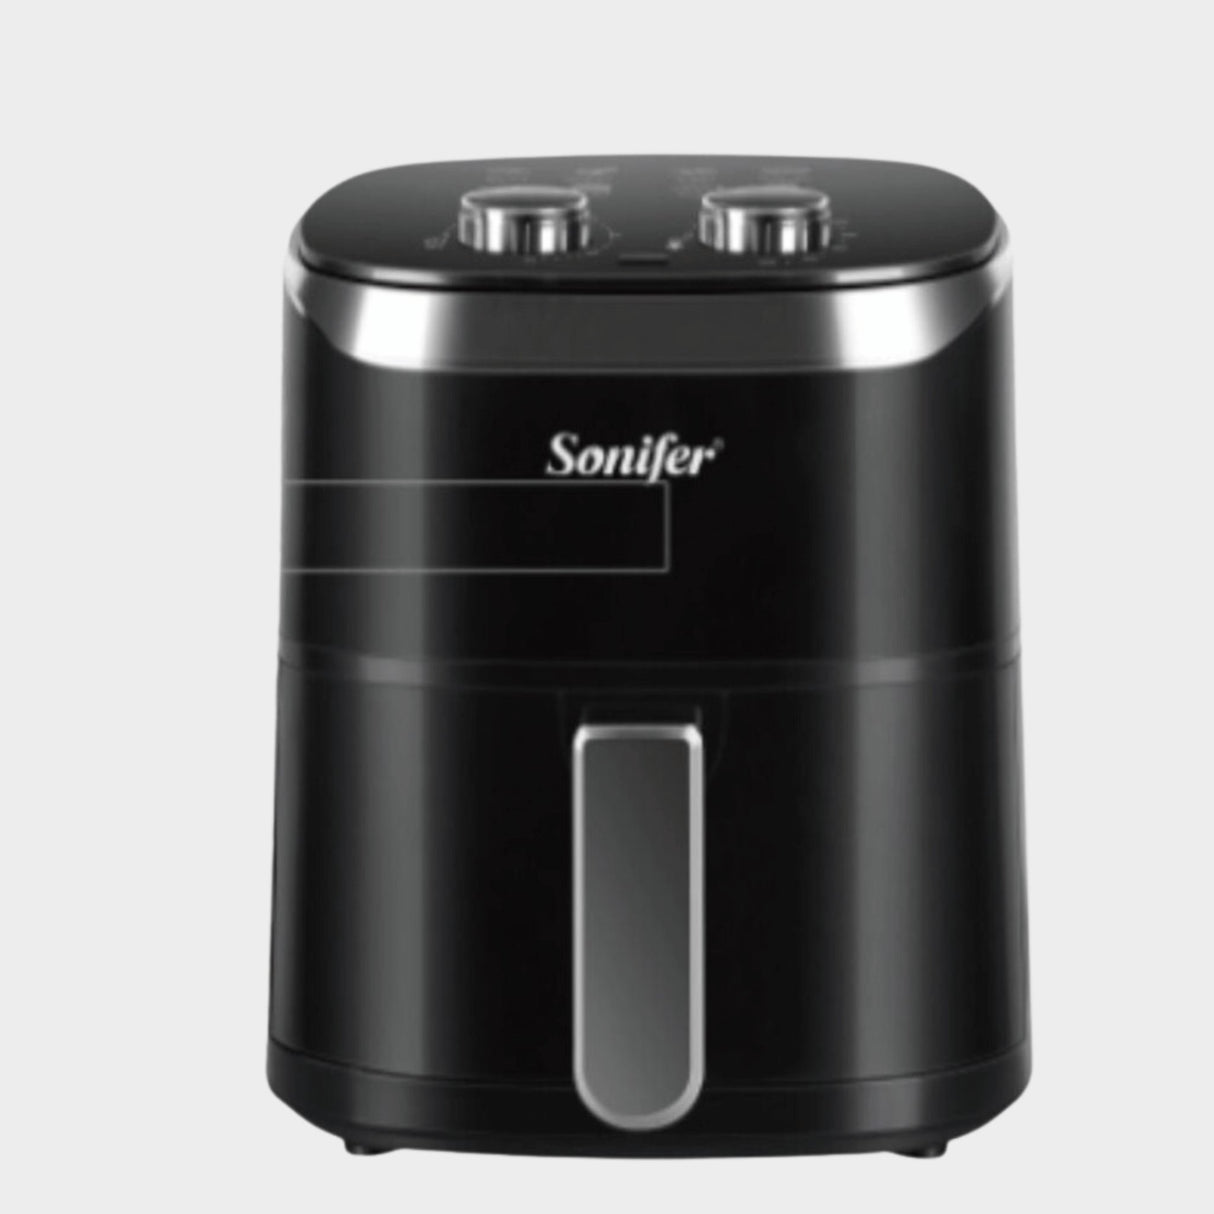 Sonifer 4.2L Air fryer Hot Electric Oven - Black - KWT Tech Mart